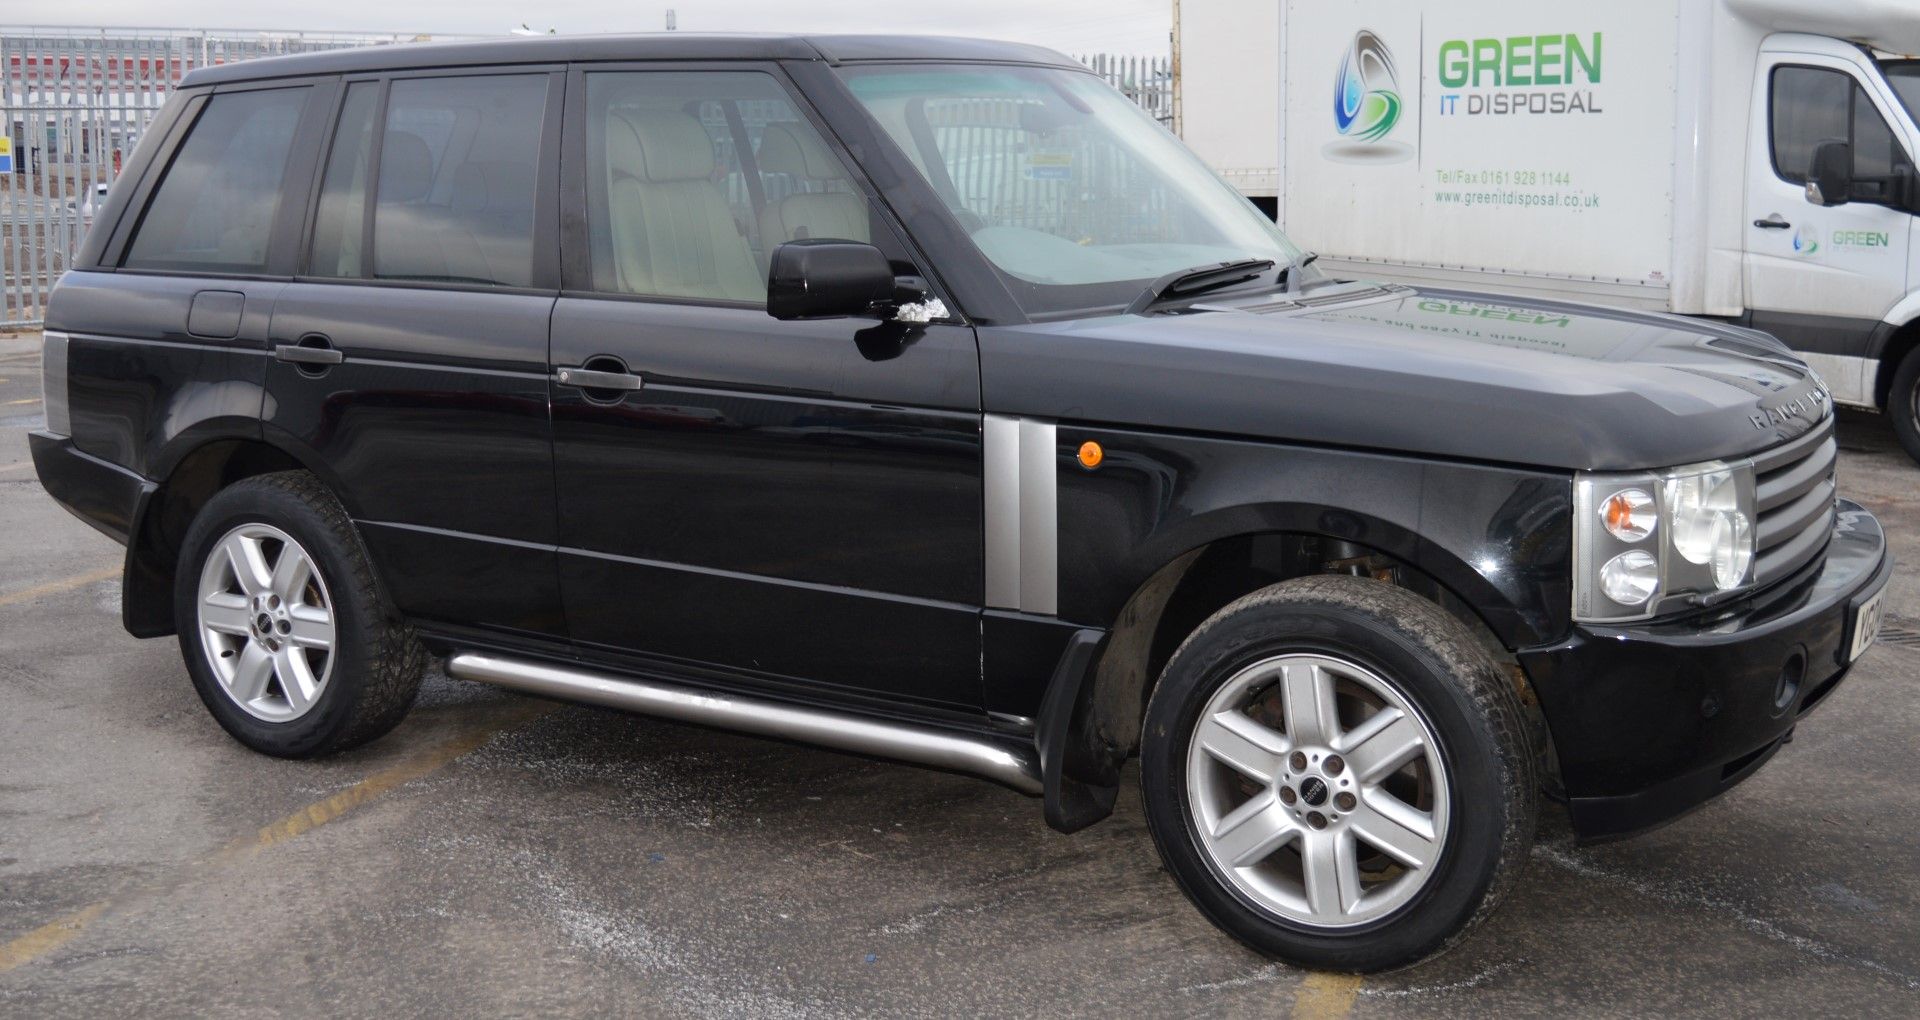 1 x Range Rover Vogue V8 4.4 Automatic - Black, Leather Interior, Petrol, Television, Premium - Image 35 of 63